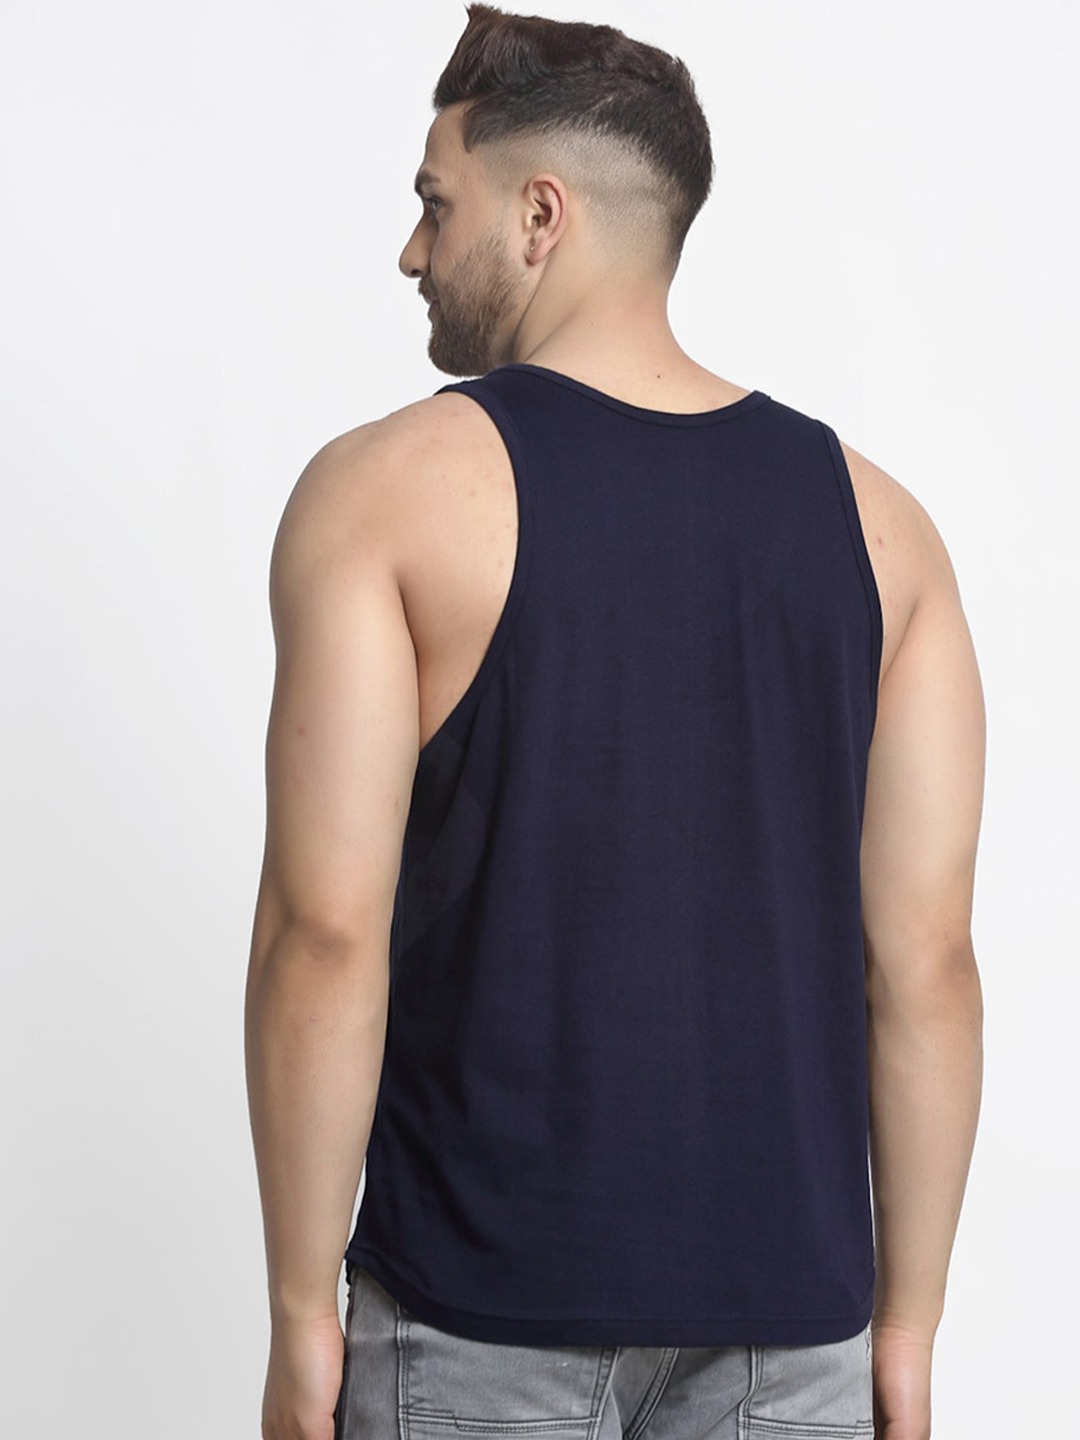 Clothing Innerwear Vests | Friskers Men Navy Blue & White Printed Cotton Apple Cut Gym Vest - JJ85289